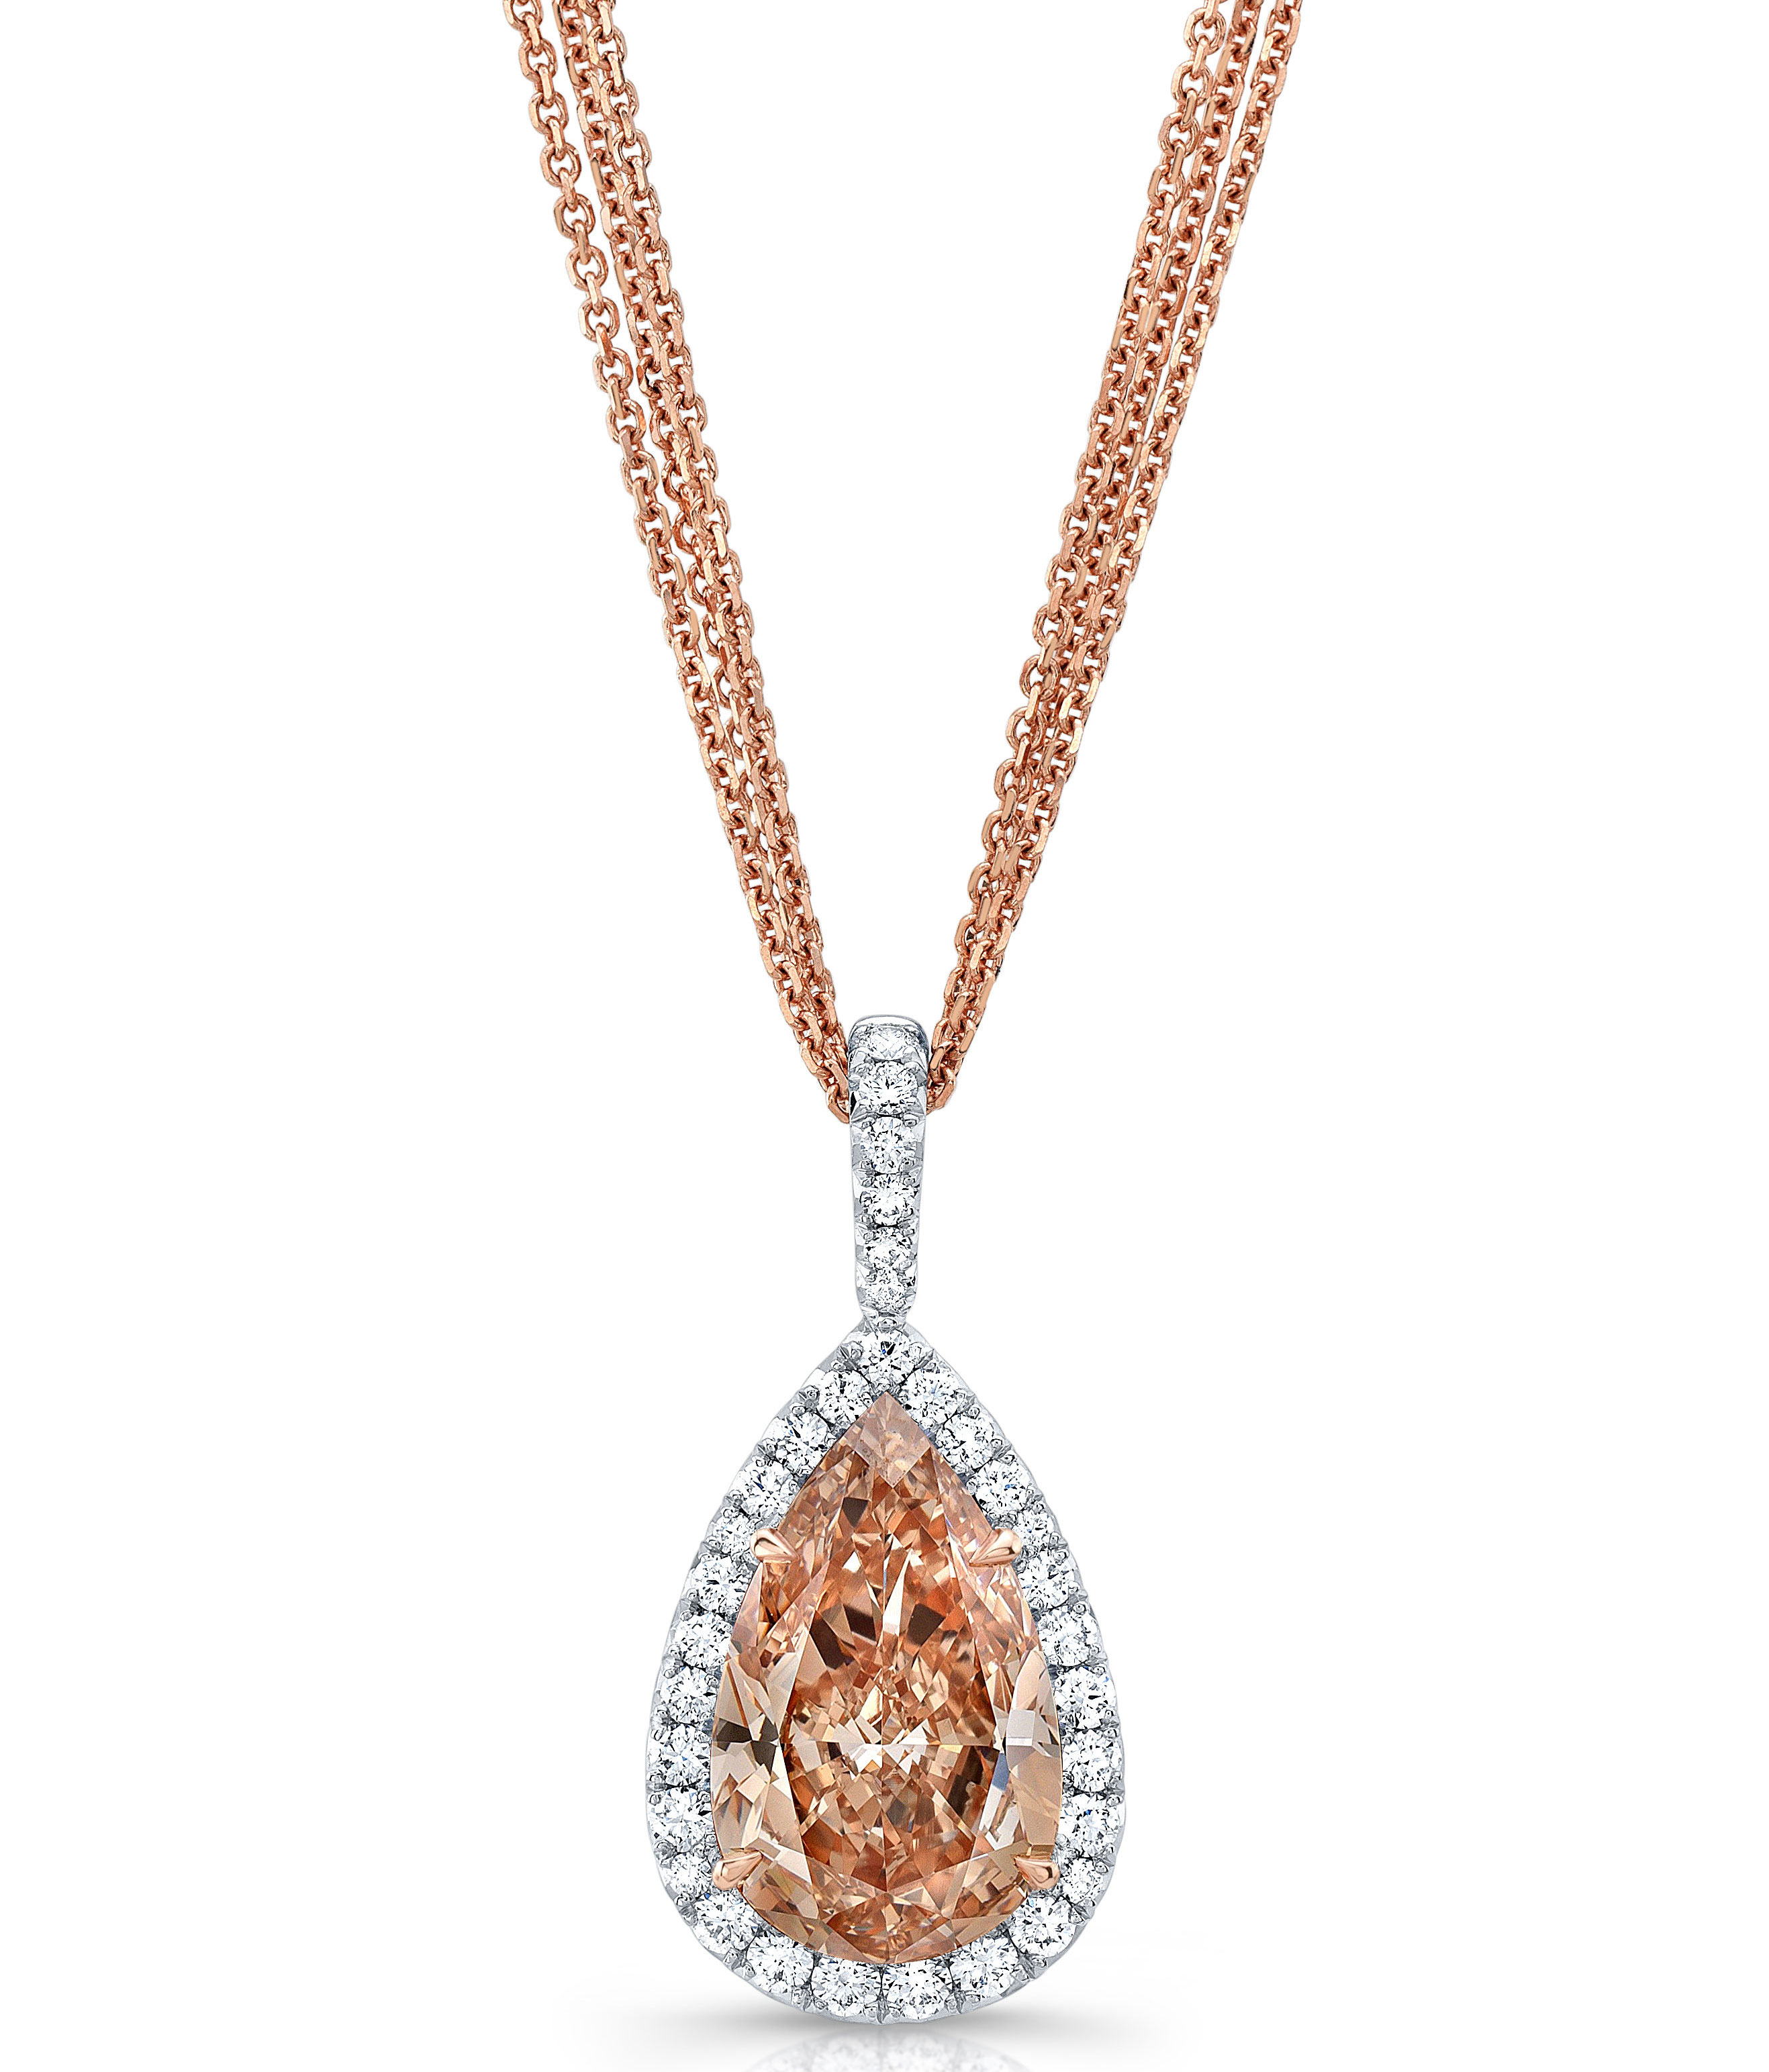 Rahaminov diamond pendant | JCK On Your Market